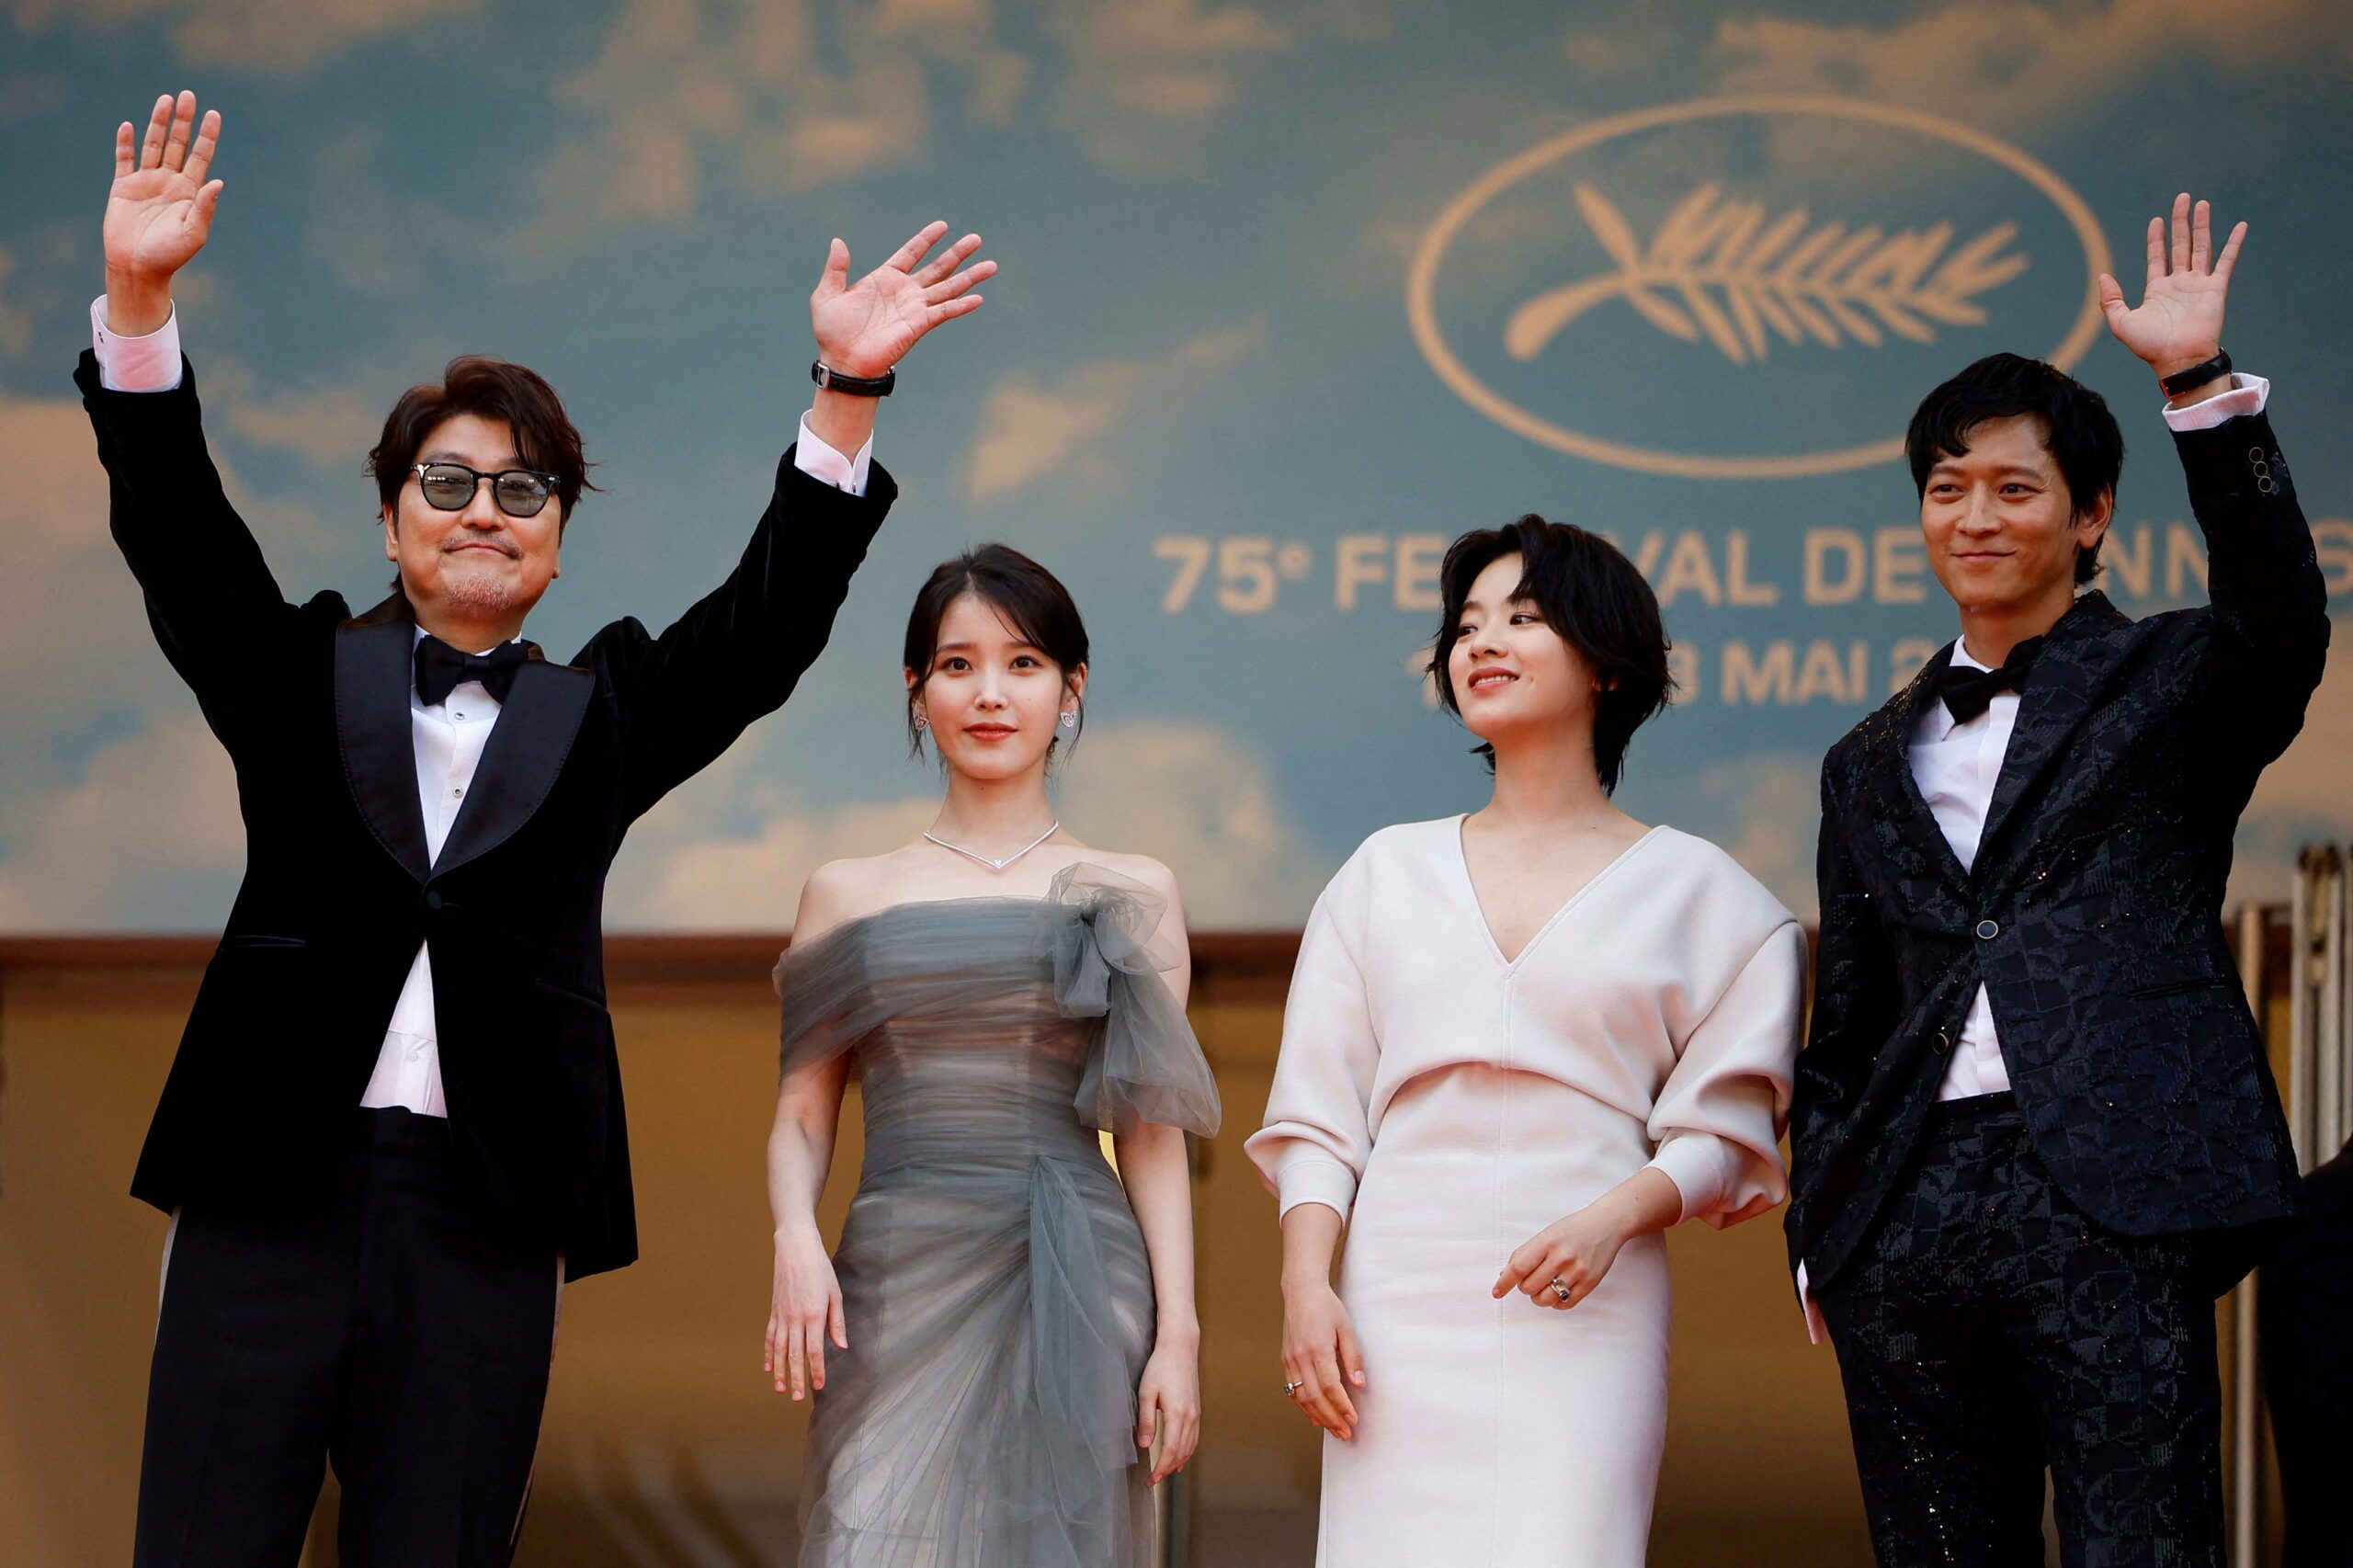 Japanese director Kore-eda brings Korean road trip drama to Cannes with ‘Broker’